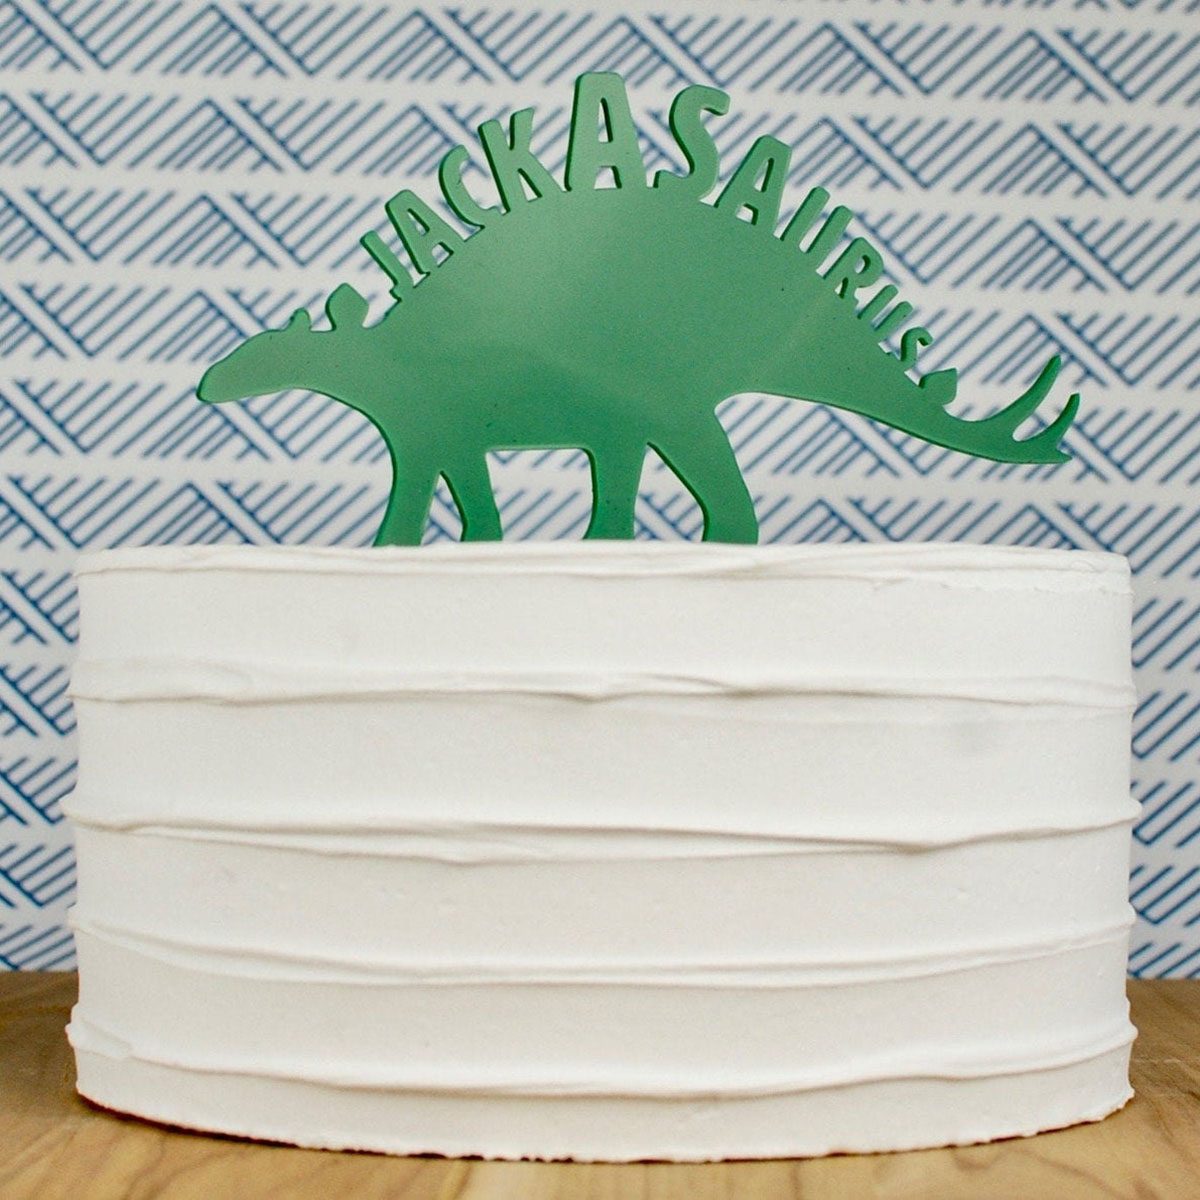 Easy At-home Dinosaur Birthday Party Ideas